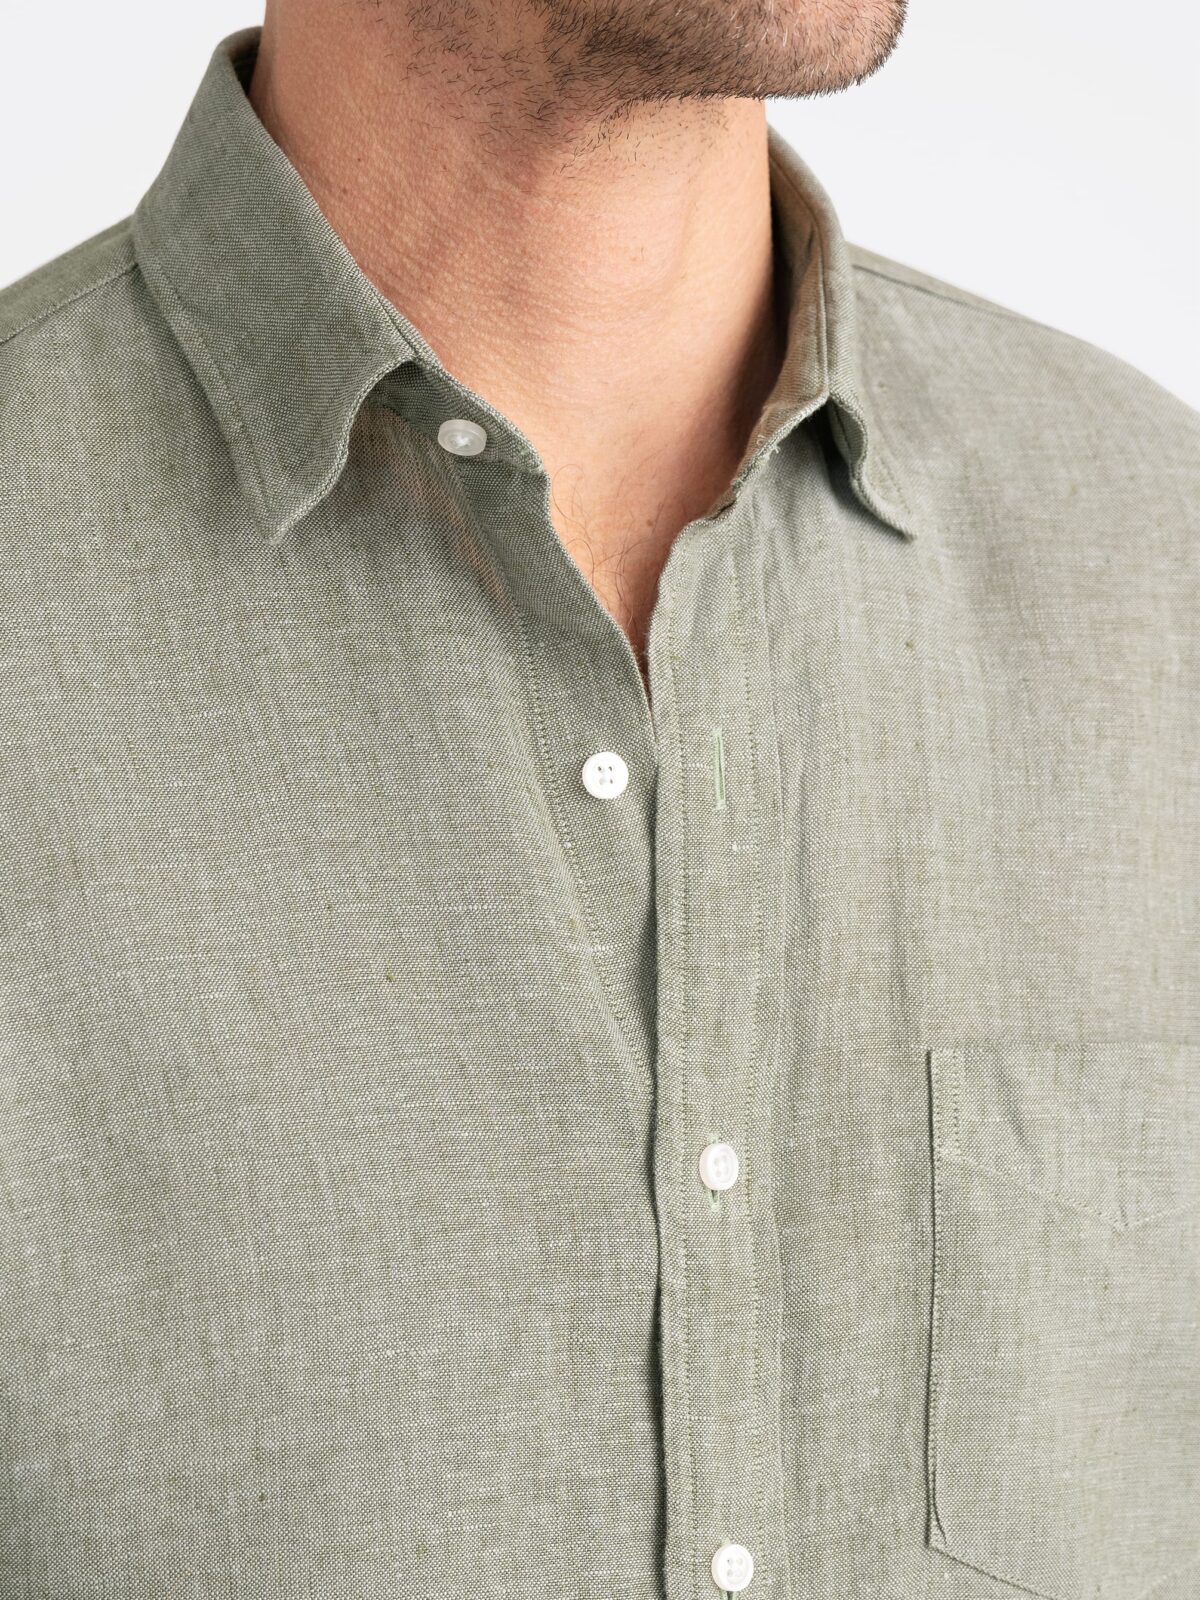 Sage Washed Linen Shirt by Proper Cloth